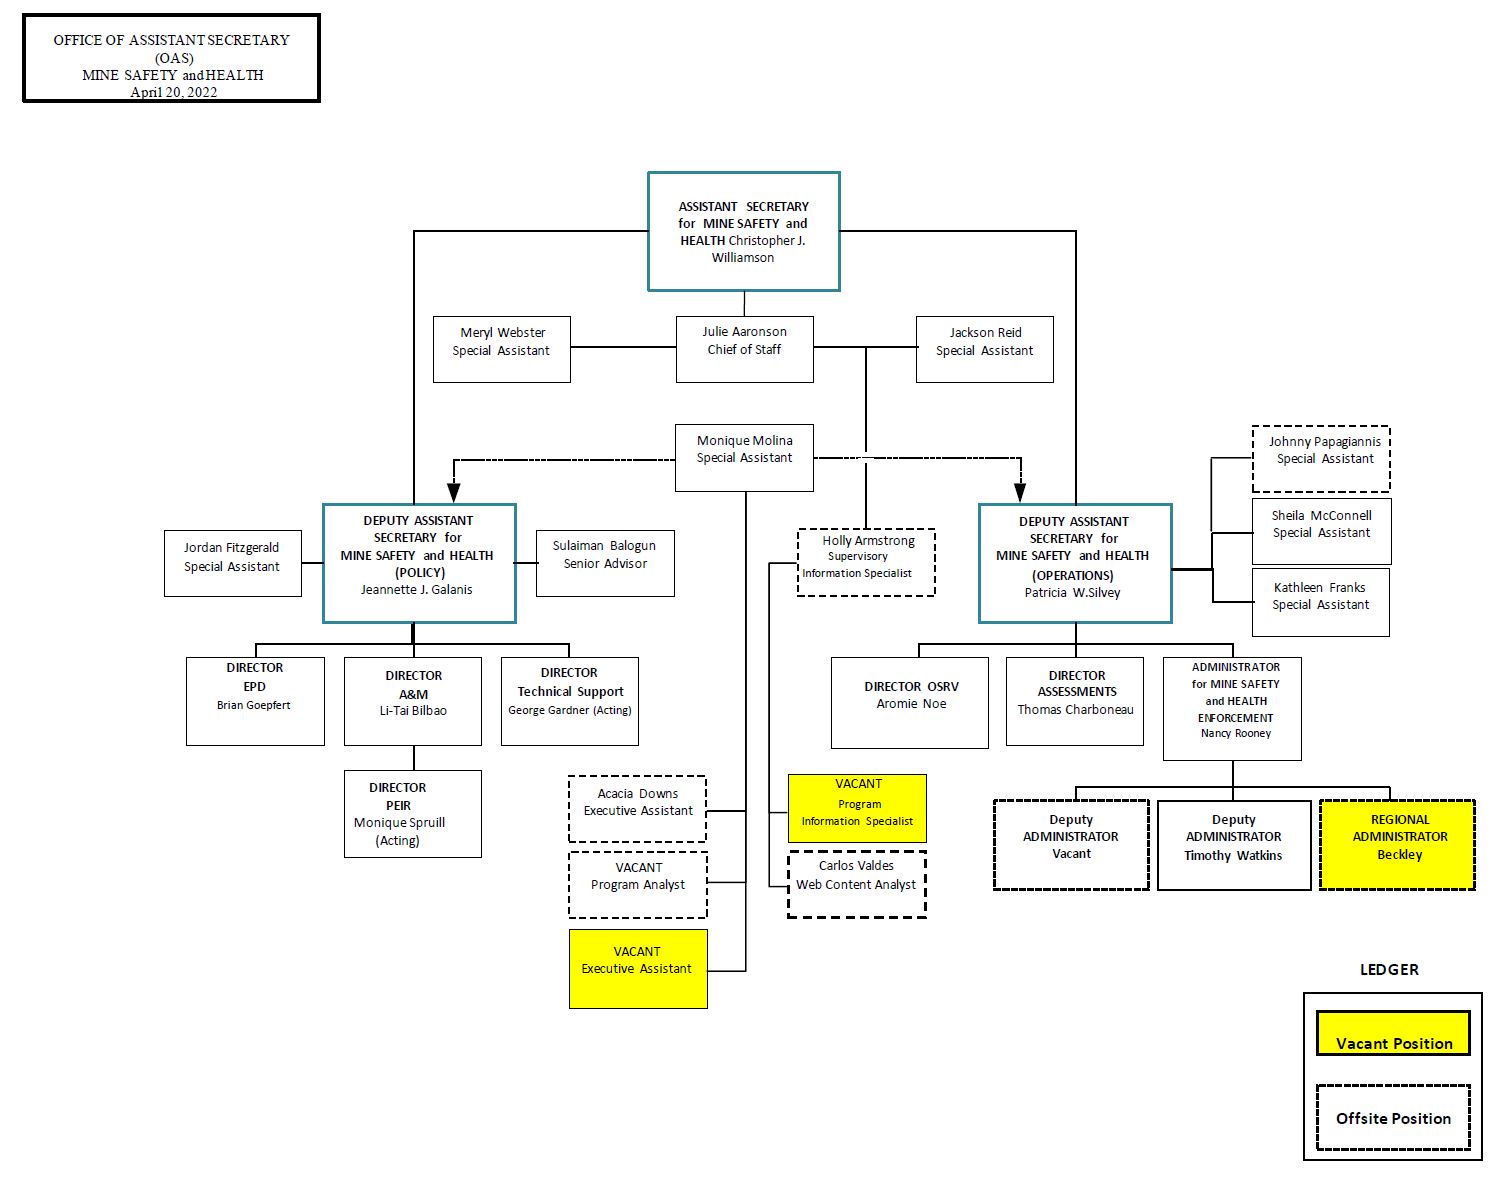 Office of Assistant Secretary organization chart